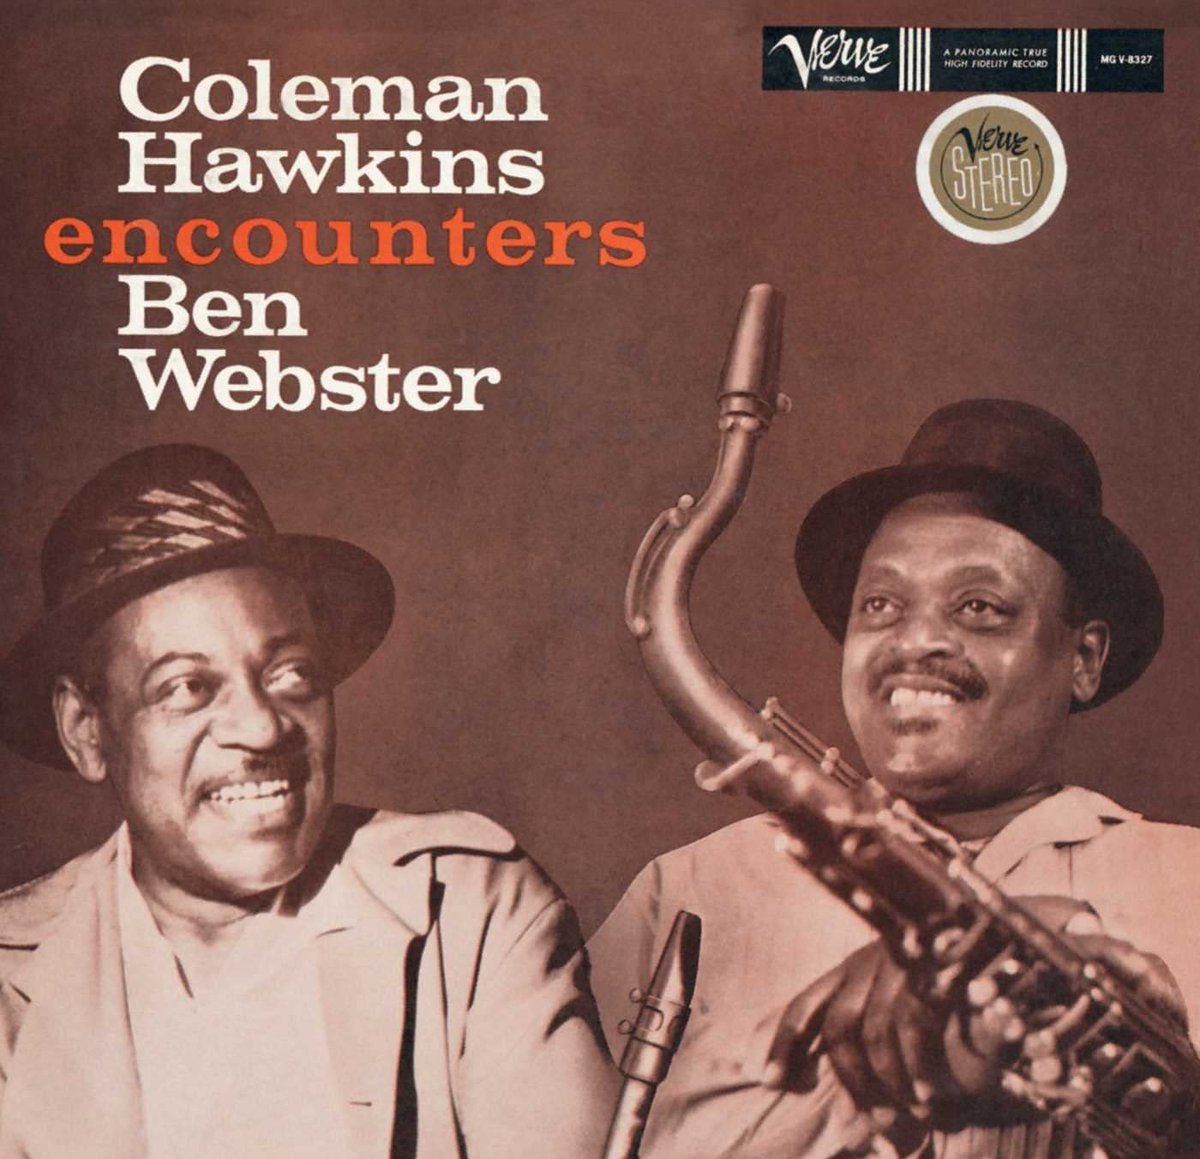 #NowPlaying #ListeningTo

#ColemanHawkins
#BenWebster
#OscarPeterson
#HerbEllis
#RayBrown
#AlvinStoller
#ColemanHawkinsEncountersBenWebster
@VerveRecords
#Jazz

youtube.com/playlist?list=…